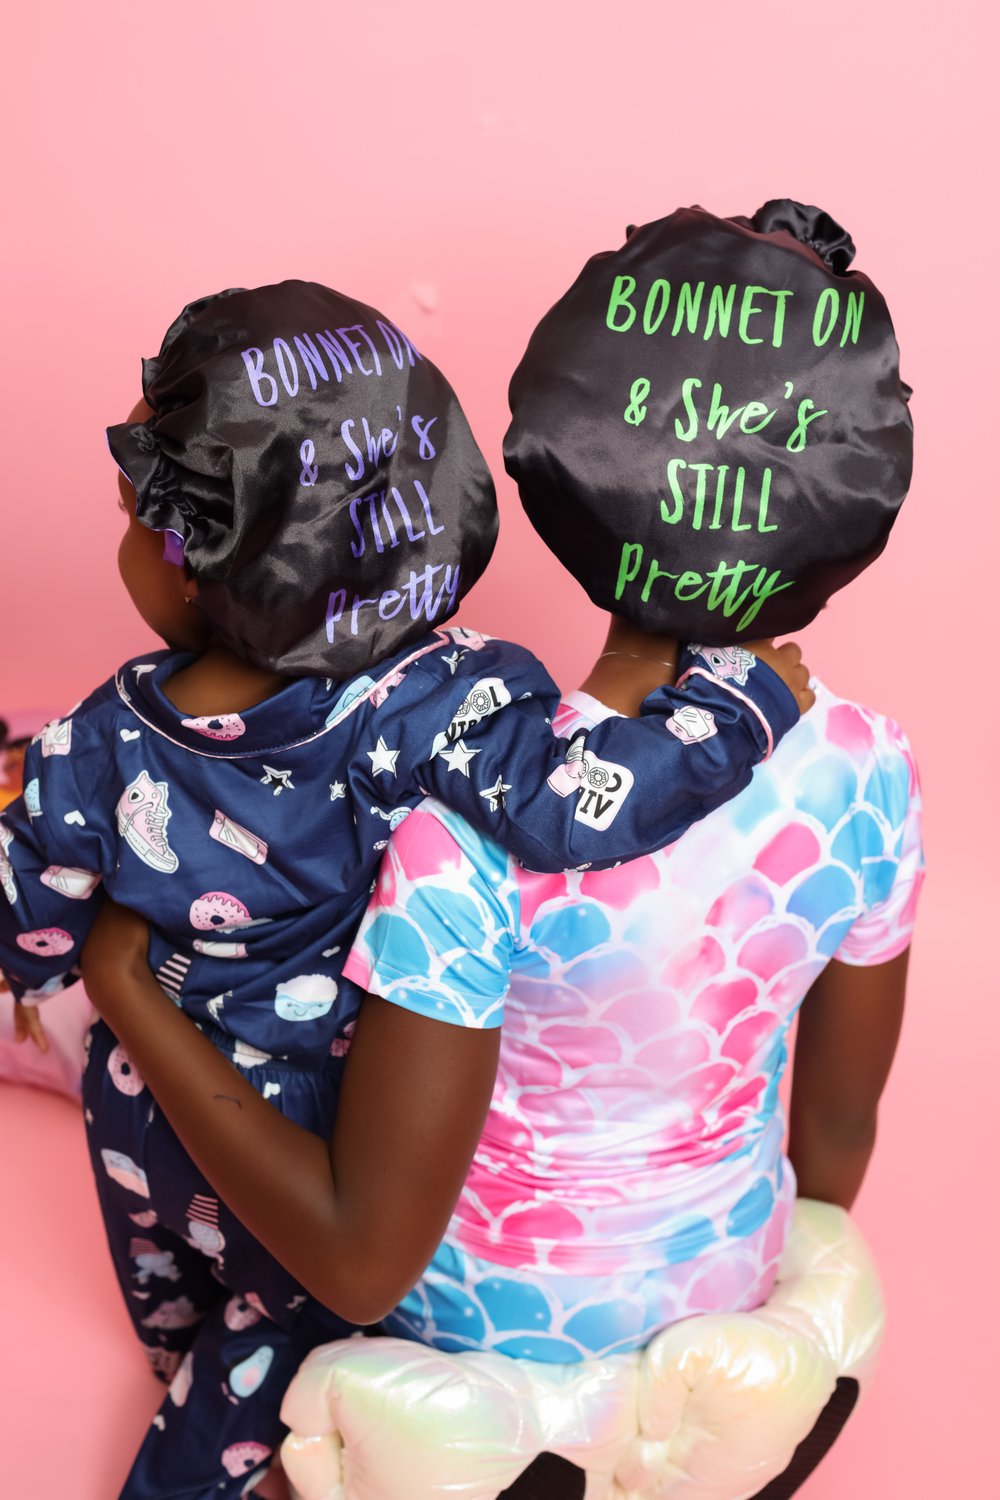 Designer Bonnets – BratzBeautyBox